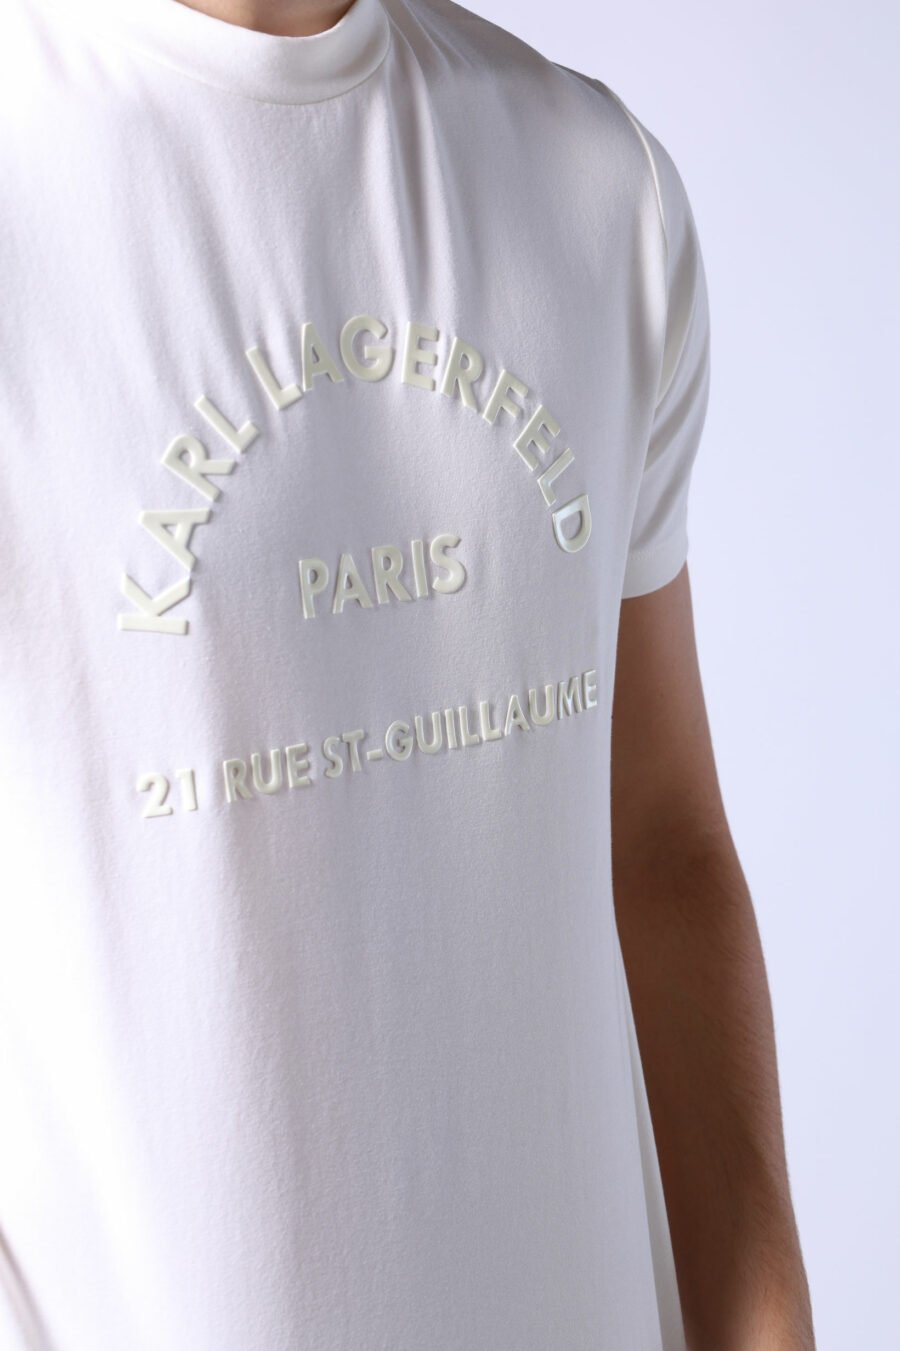 Camiseta blanca con maxilogo monocromático "rue st guillaume" - Untitled Catalog 05761